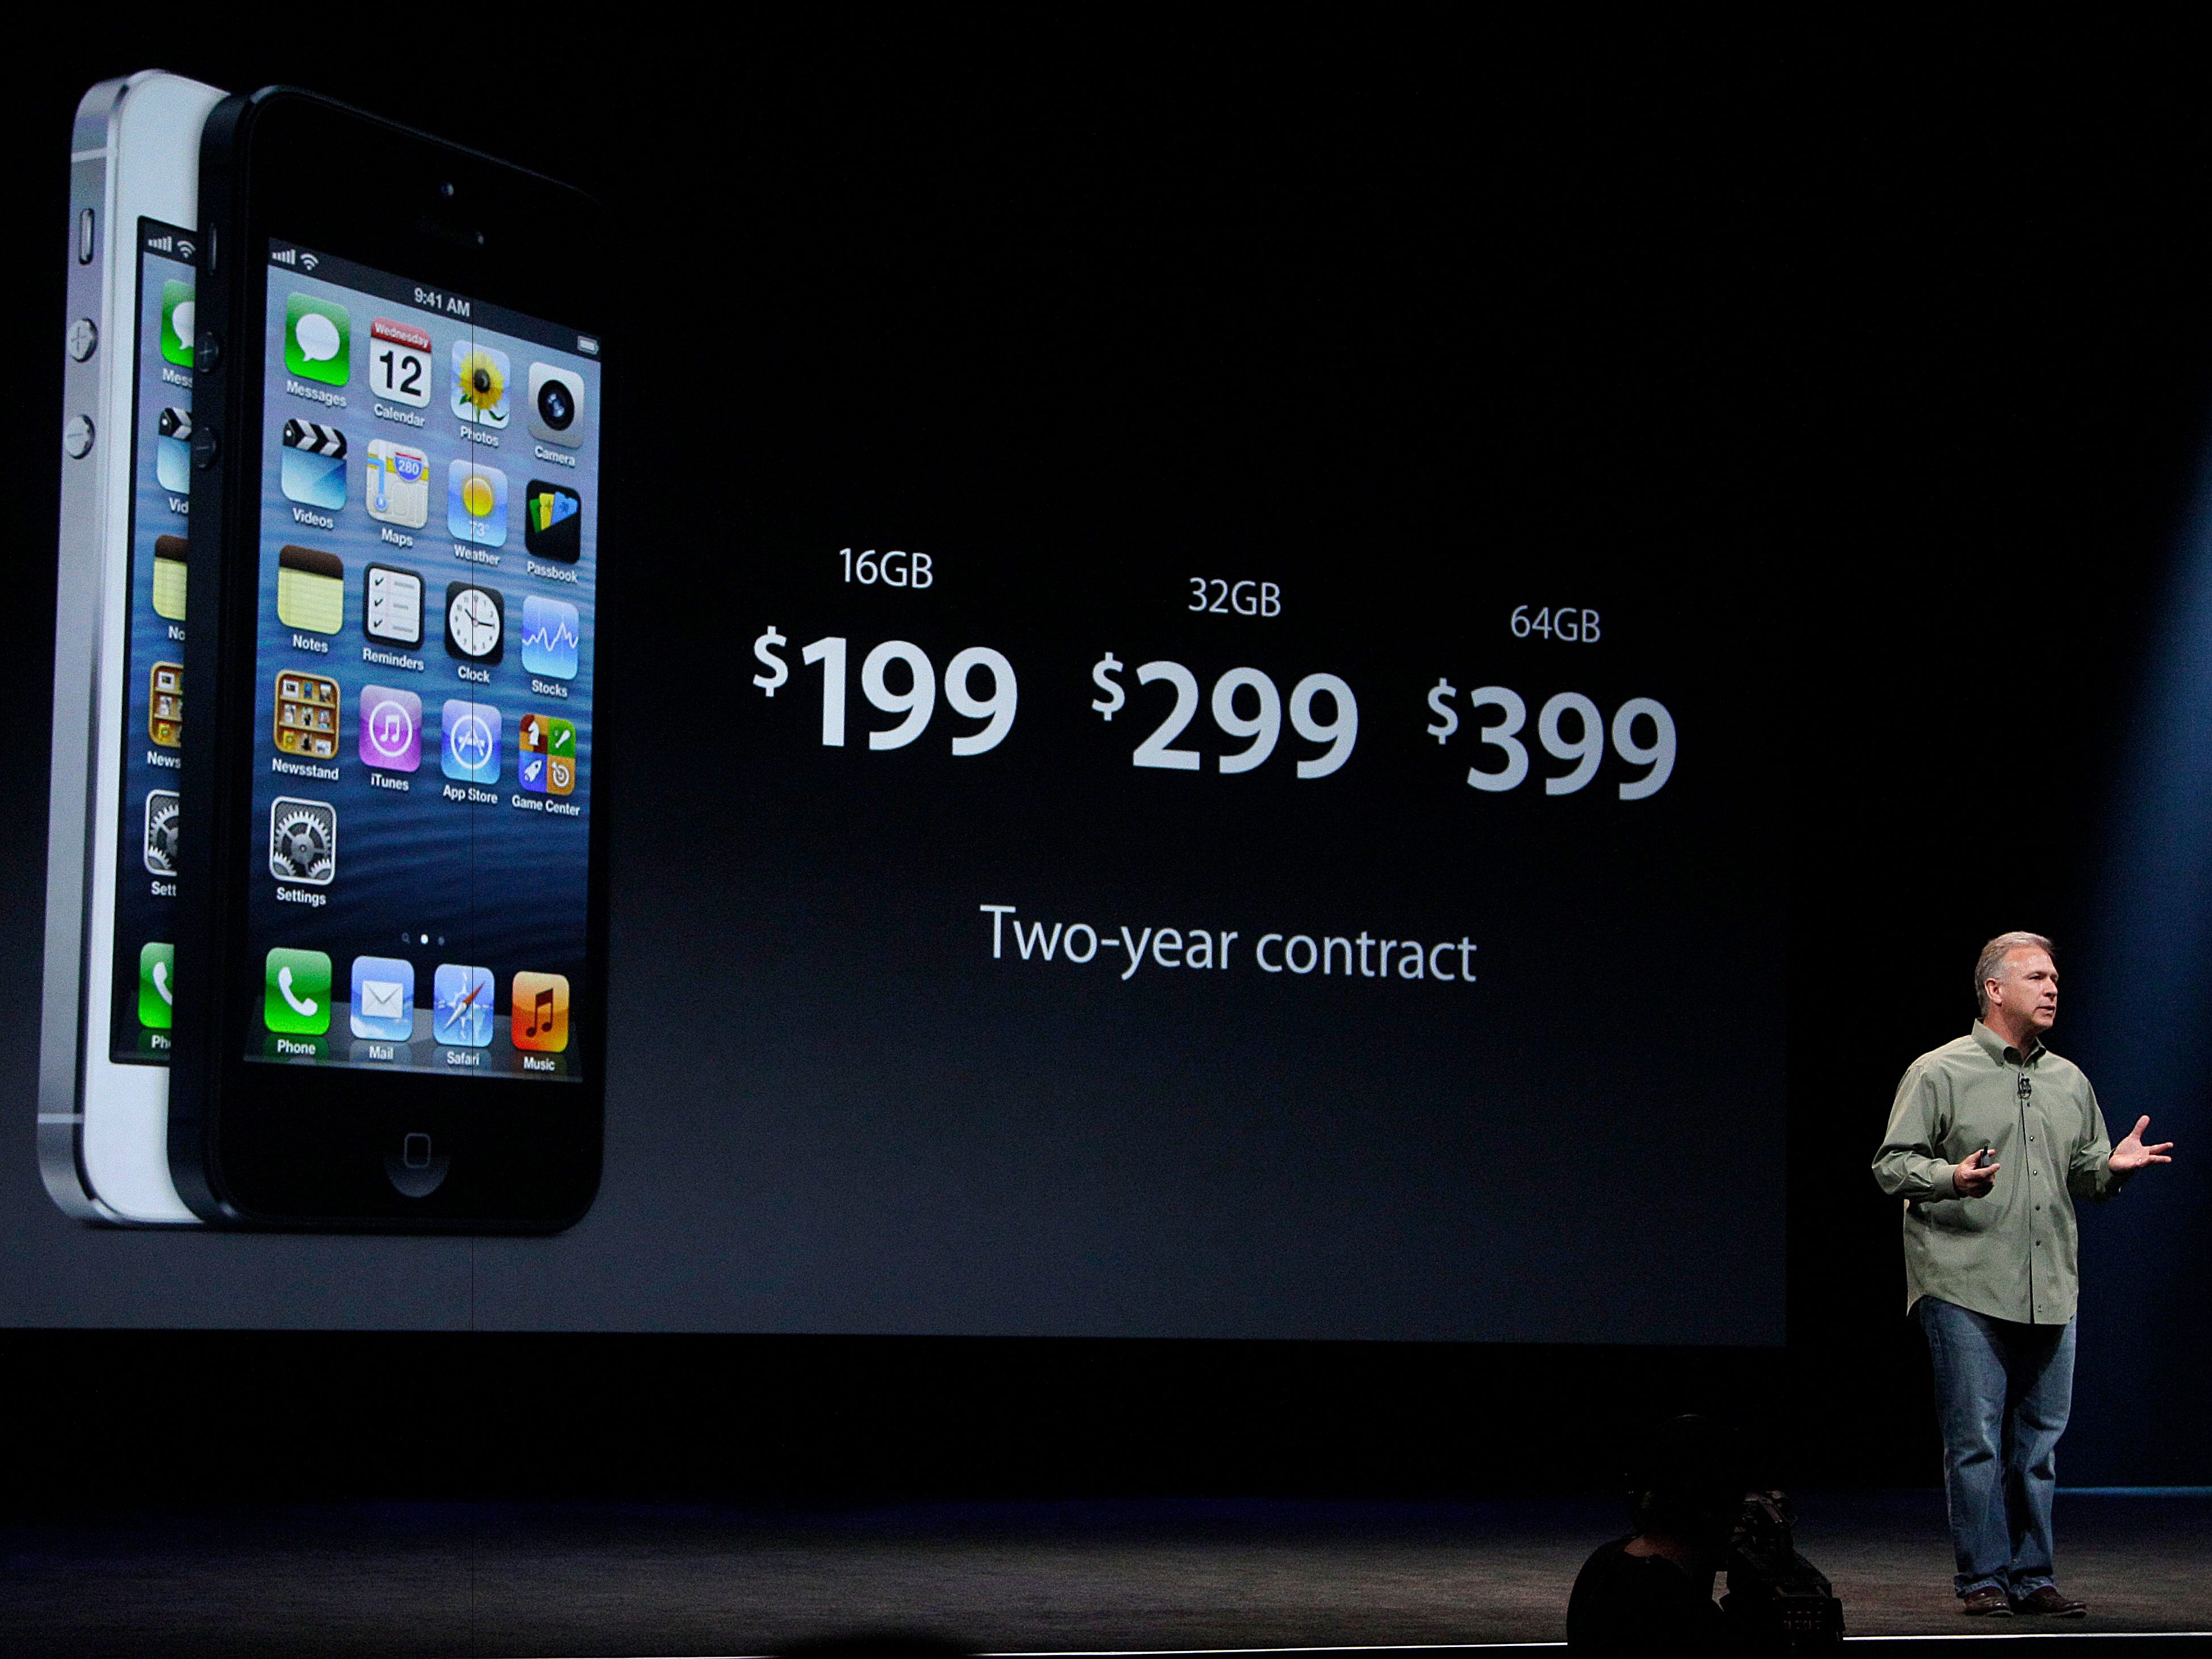 iPhone 5 pricing phil schiller